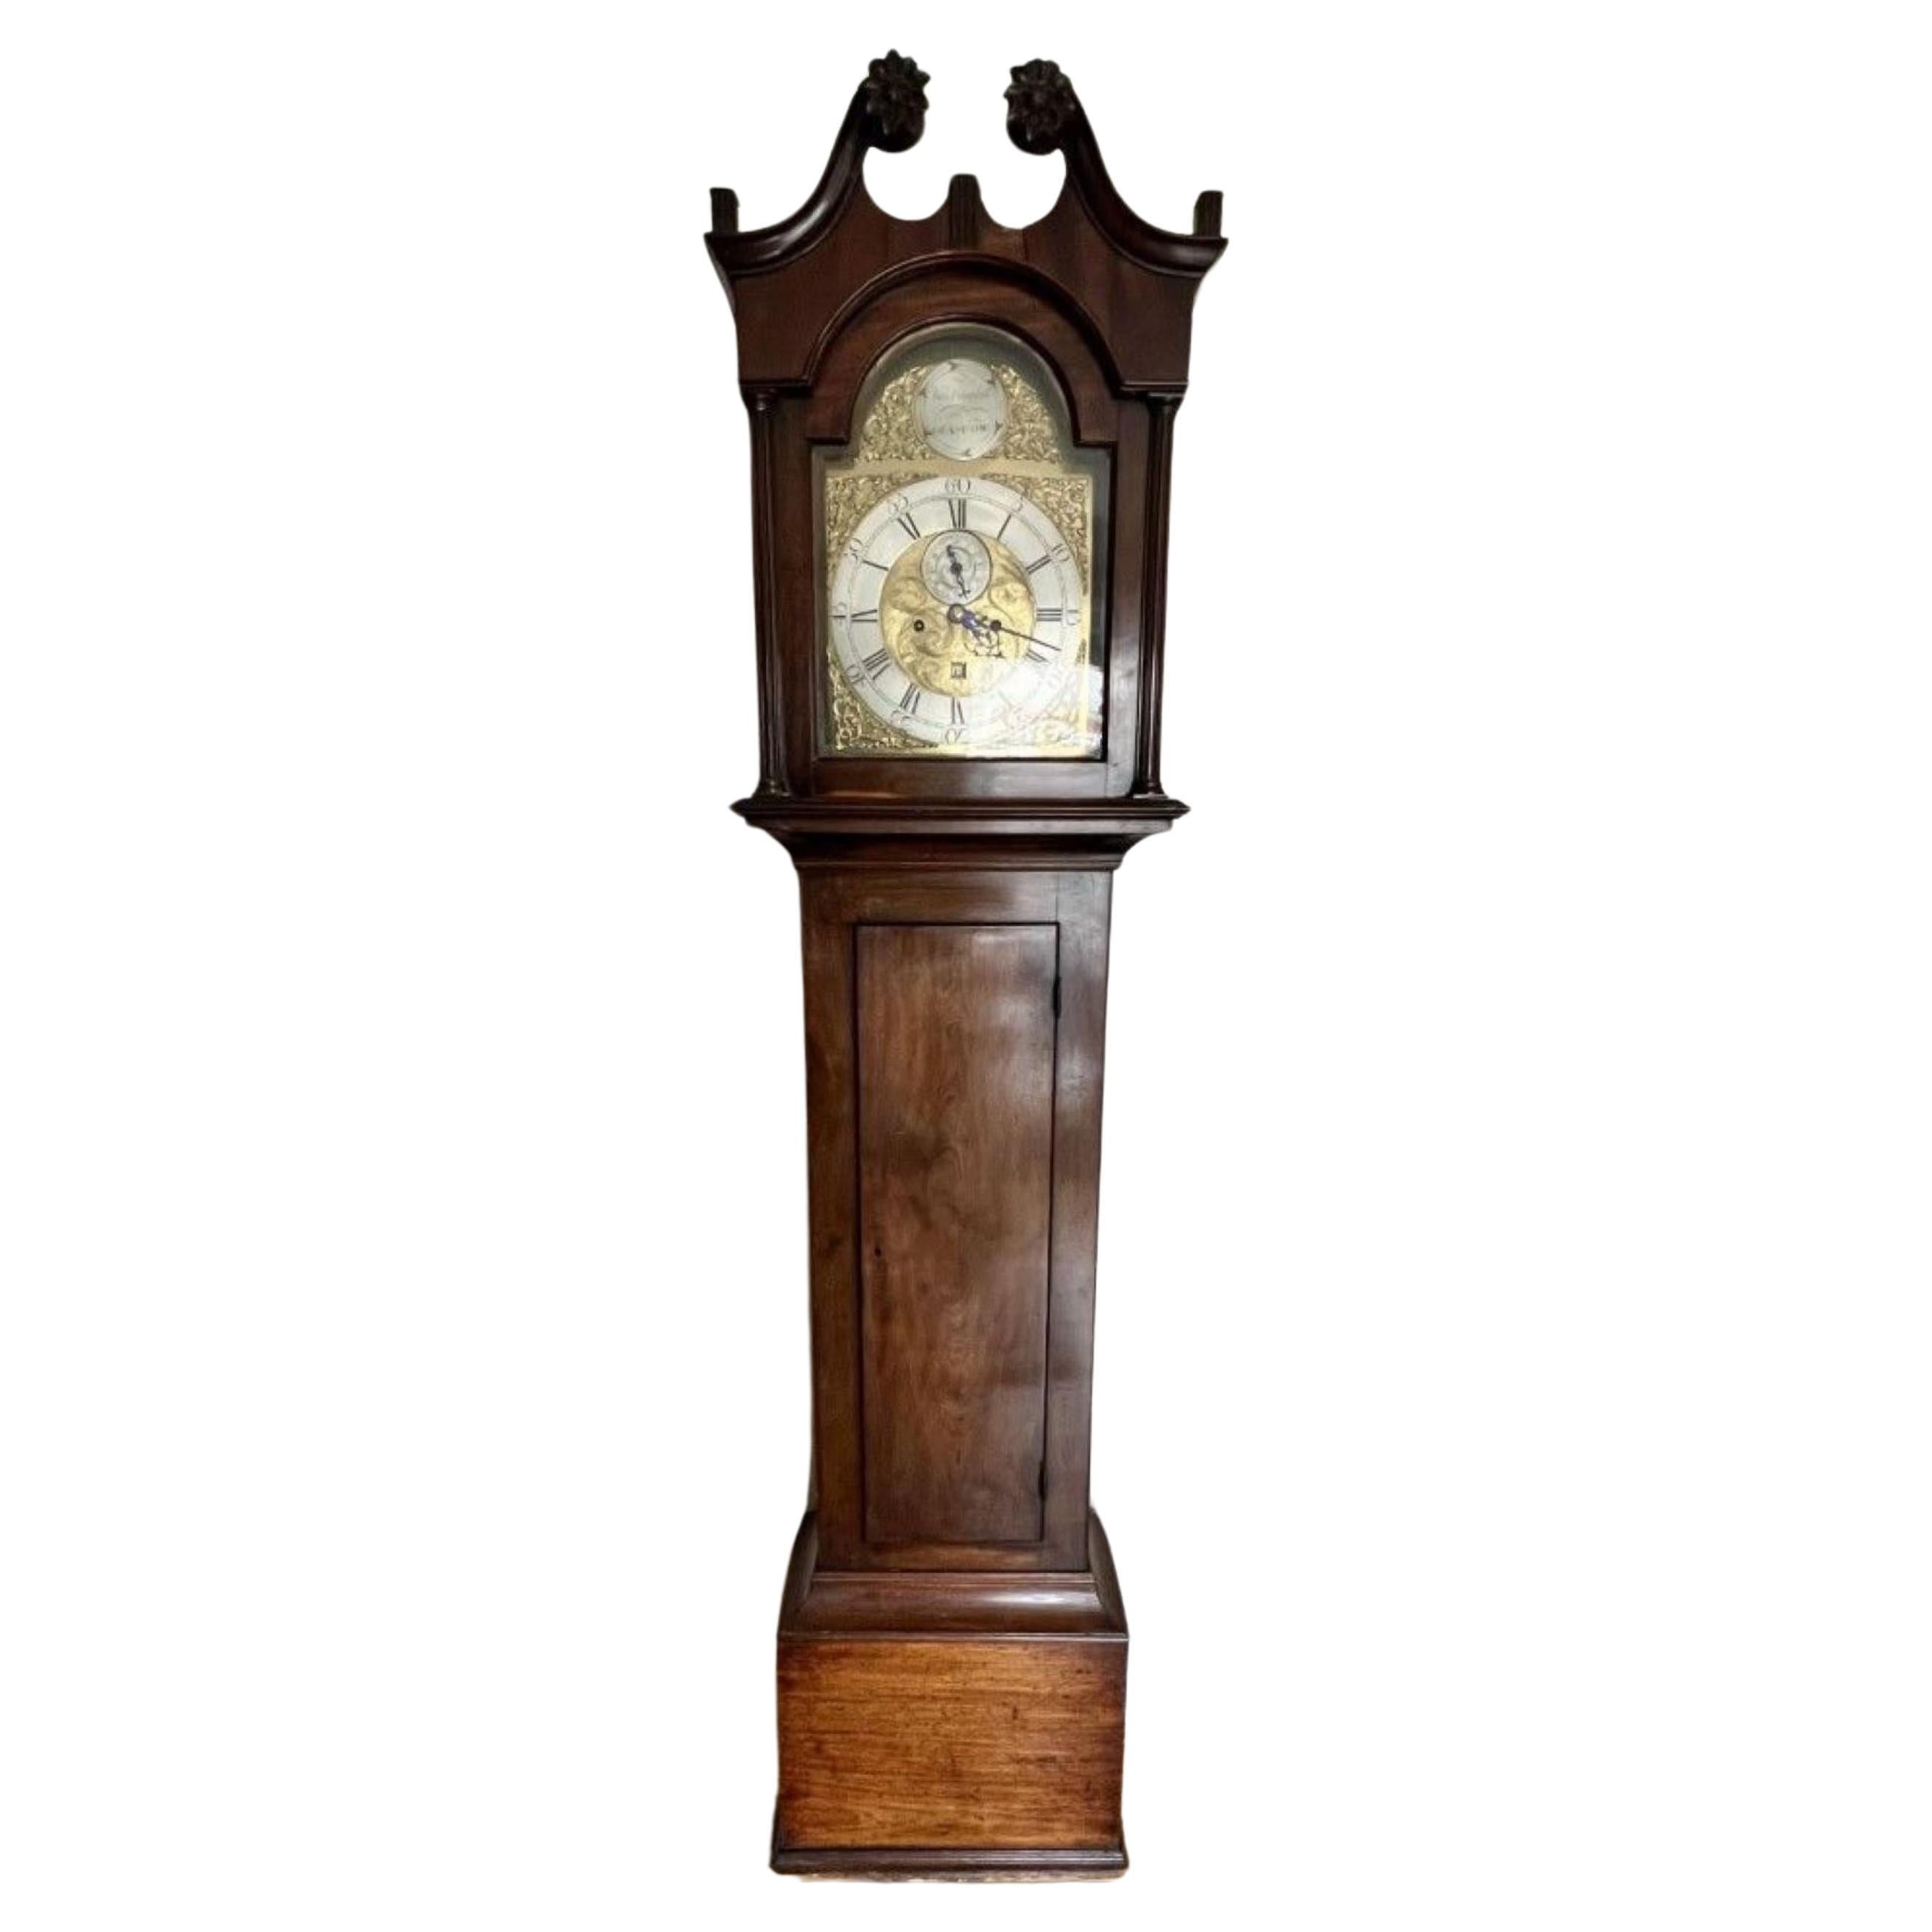 Quality antique 19th century Scottish mahogany long case clock